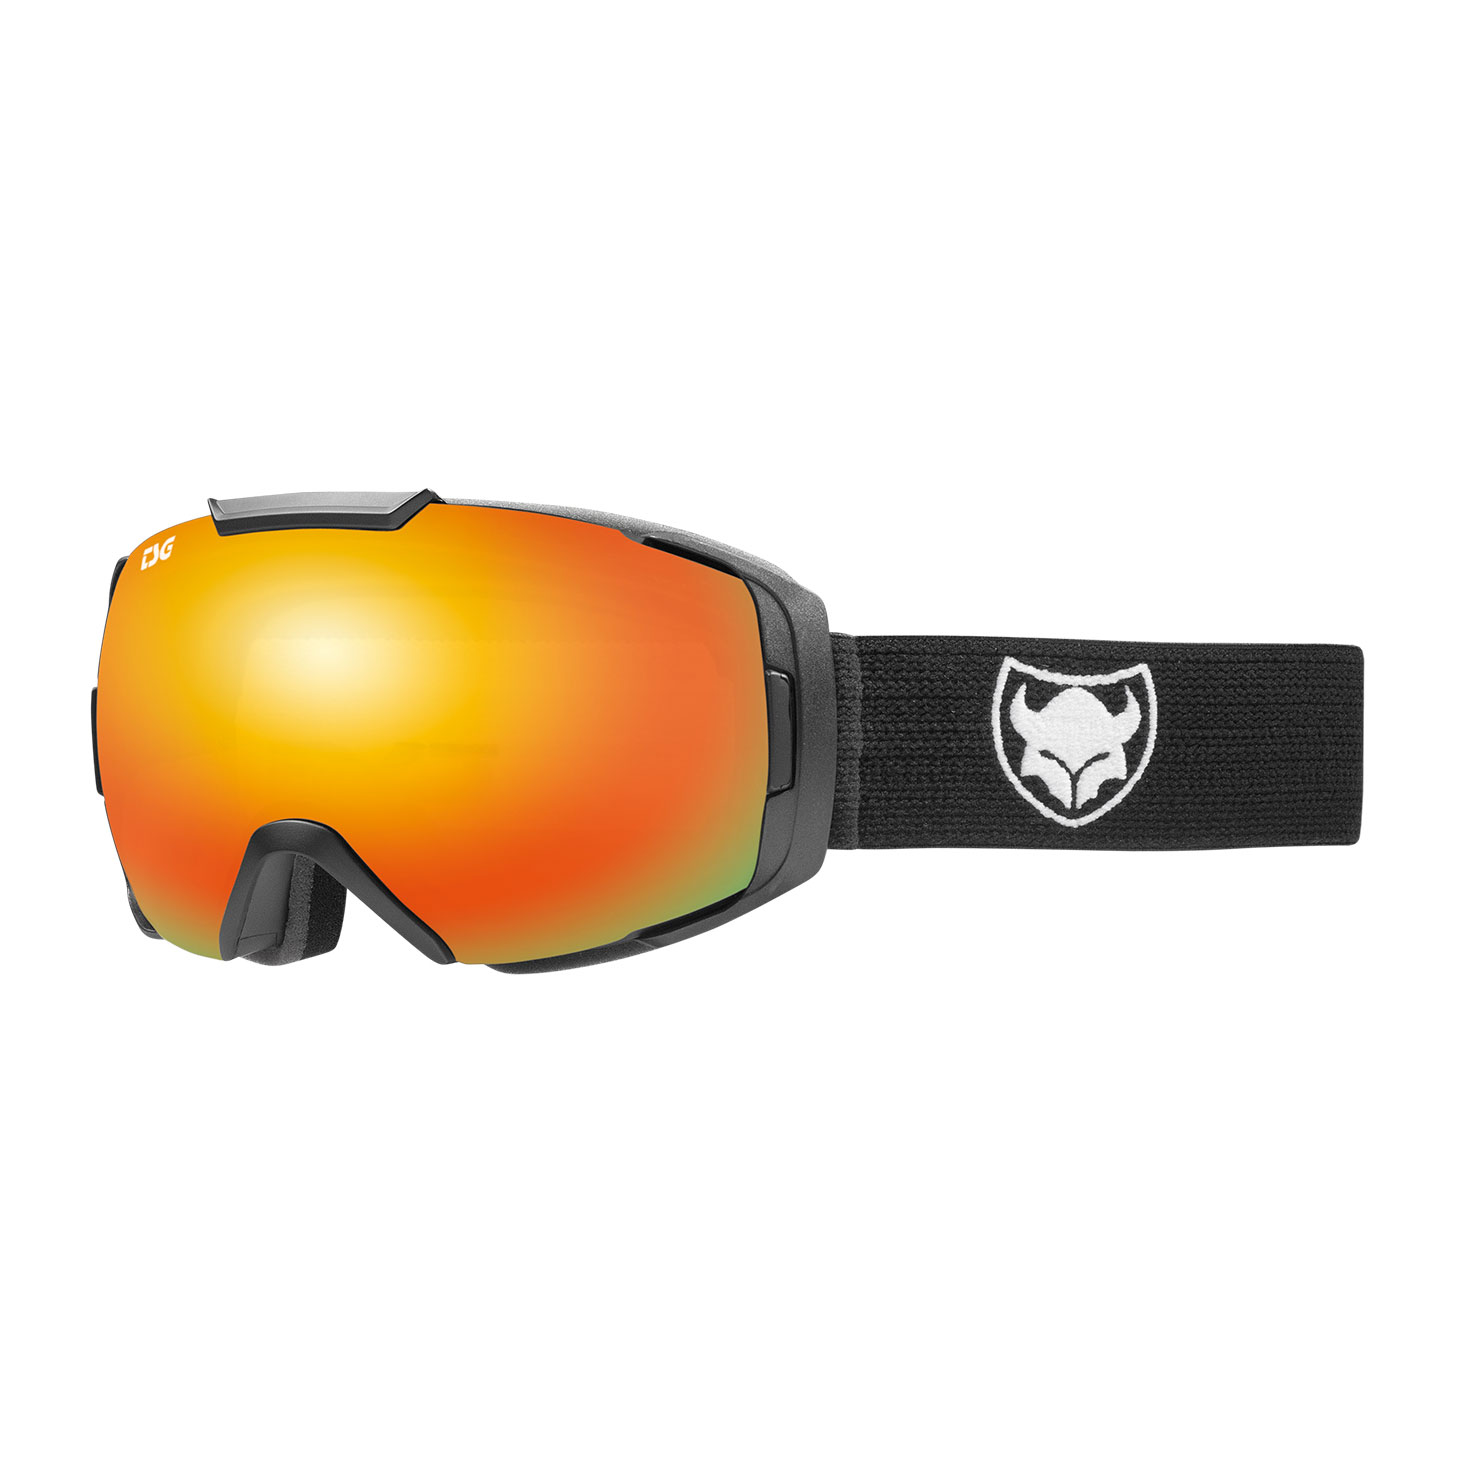 TSG Snowboardbrille Goggle One - Solid Black